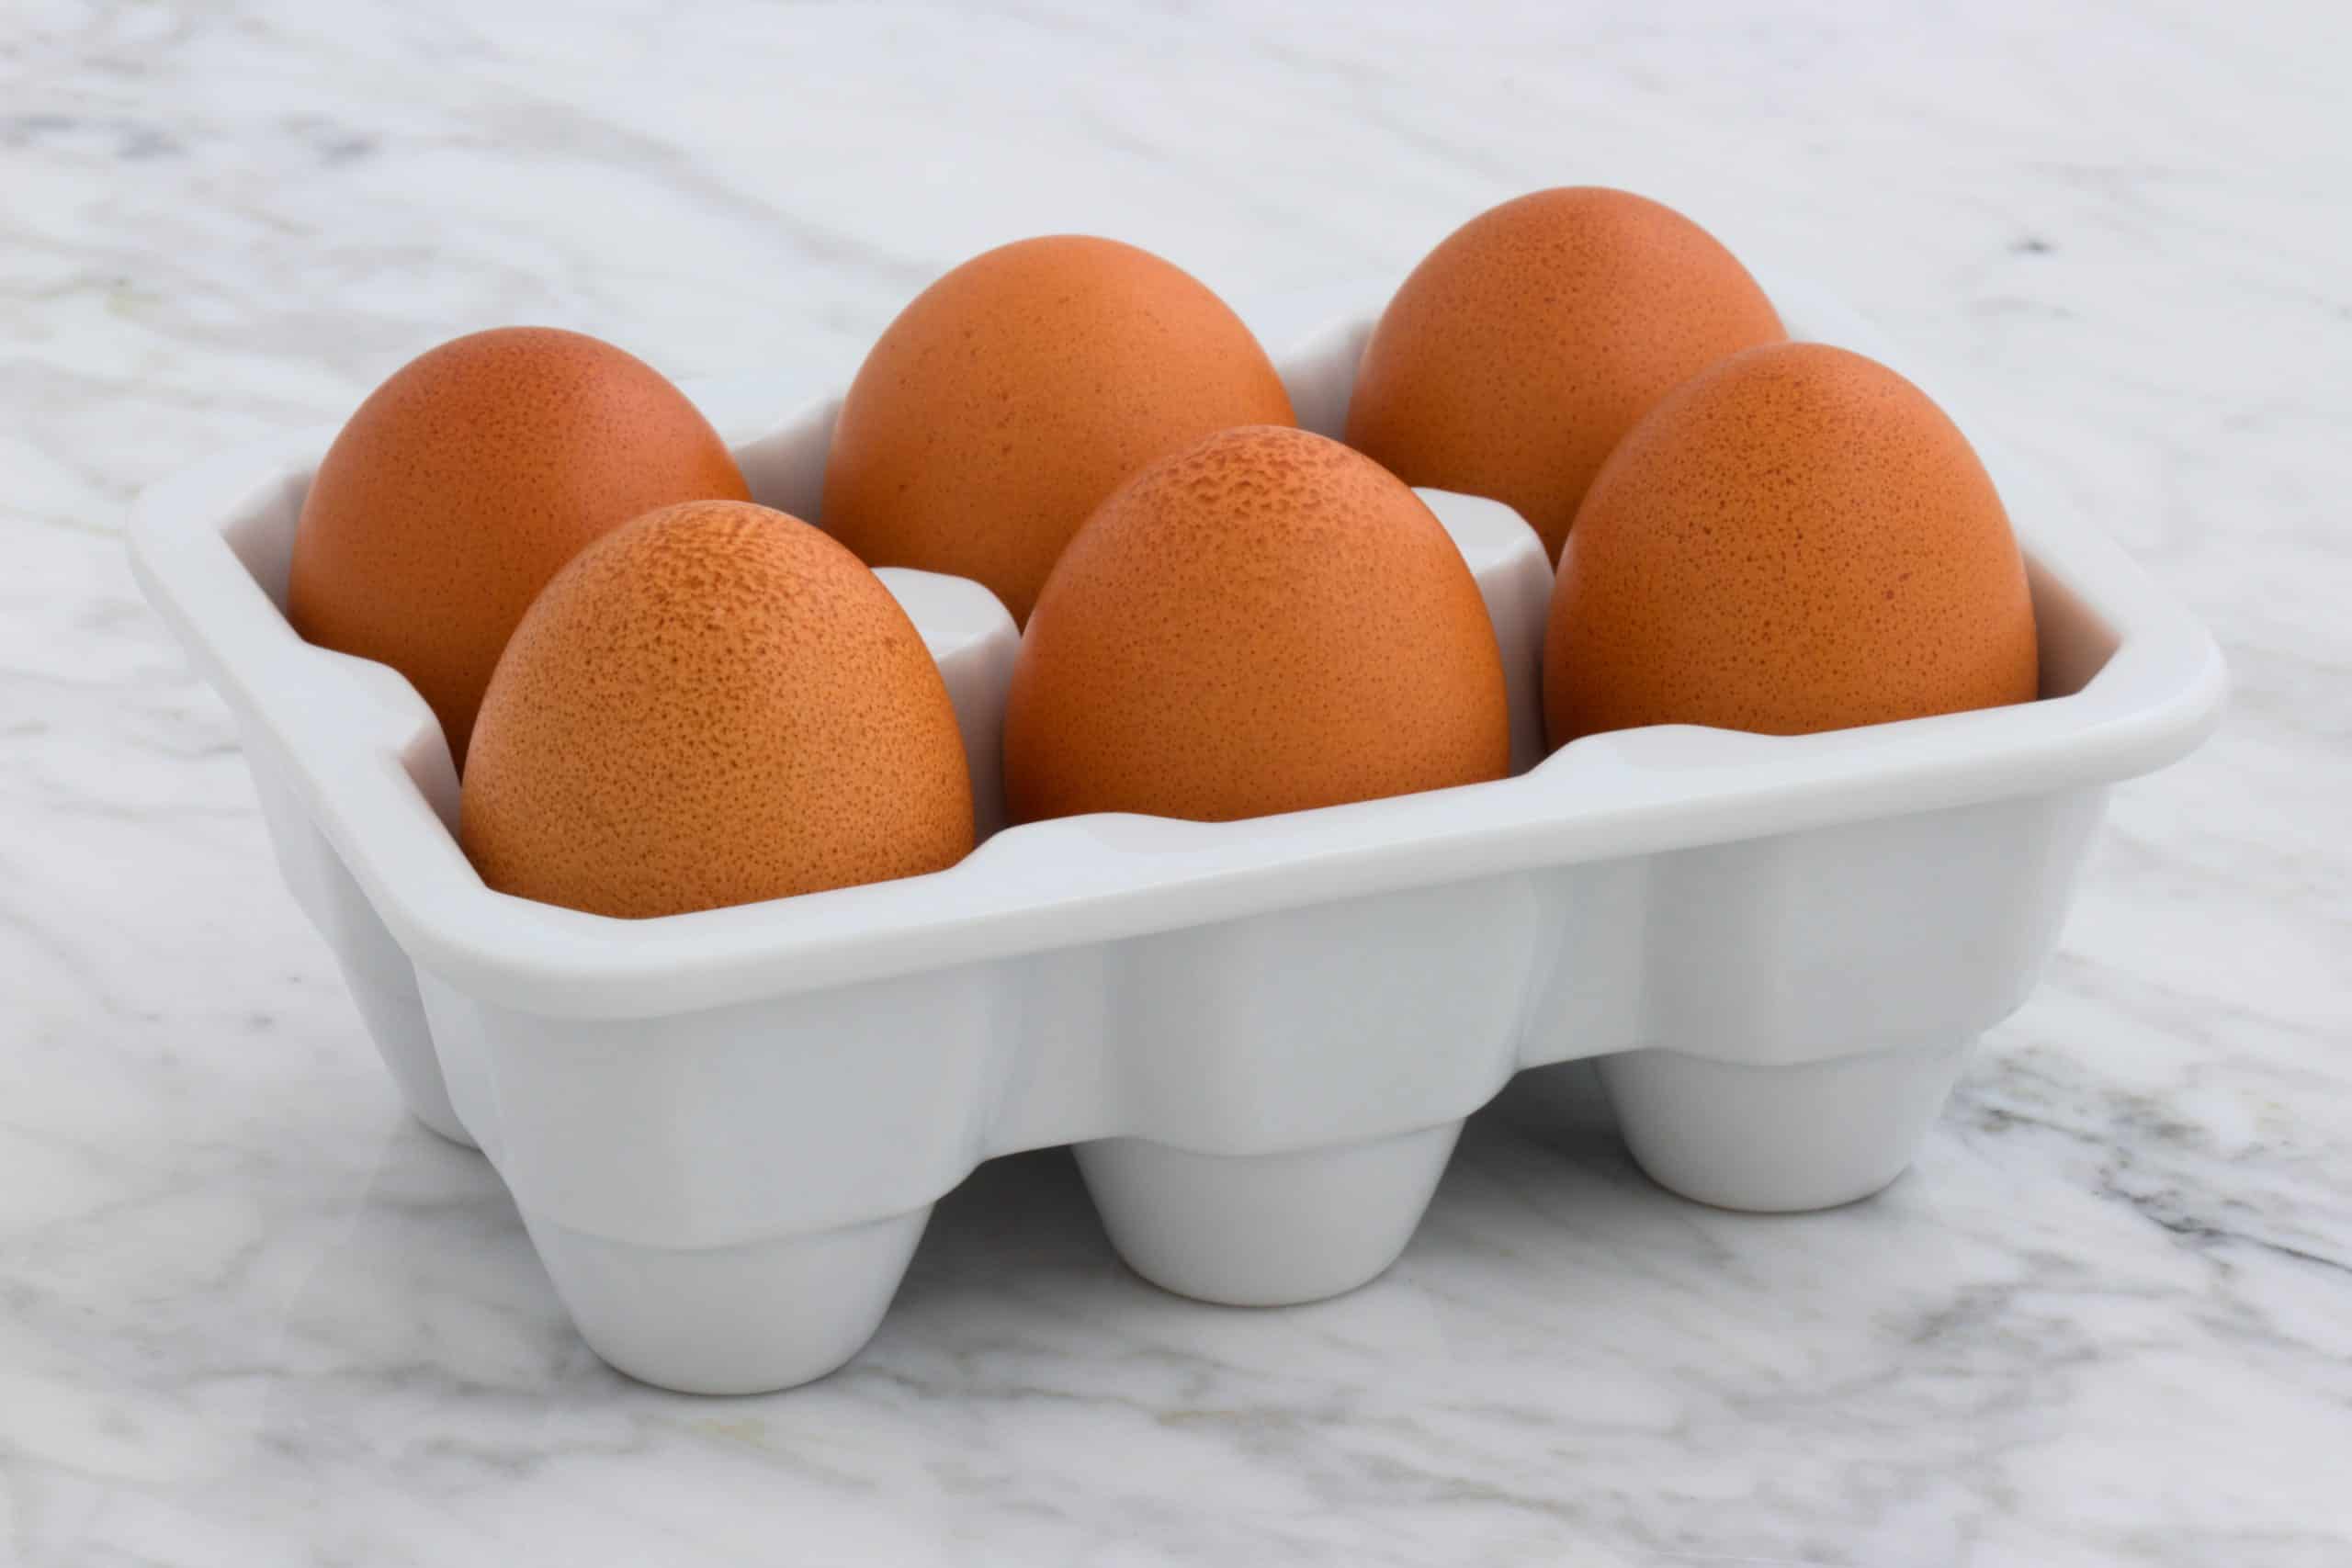 tray of 6 eggs